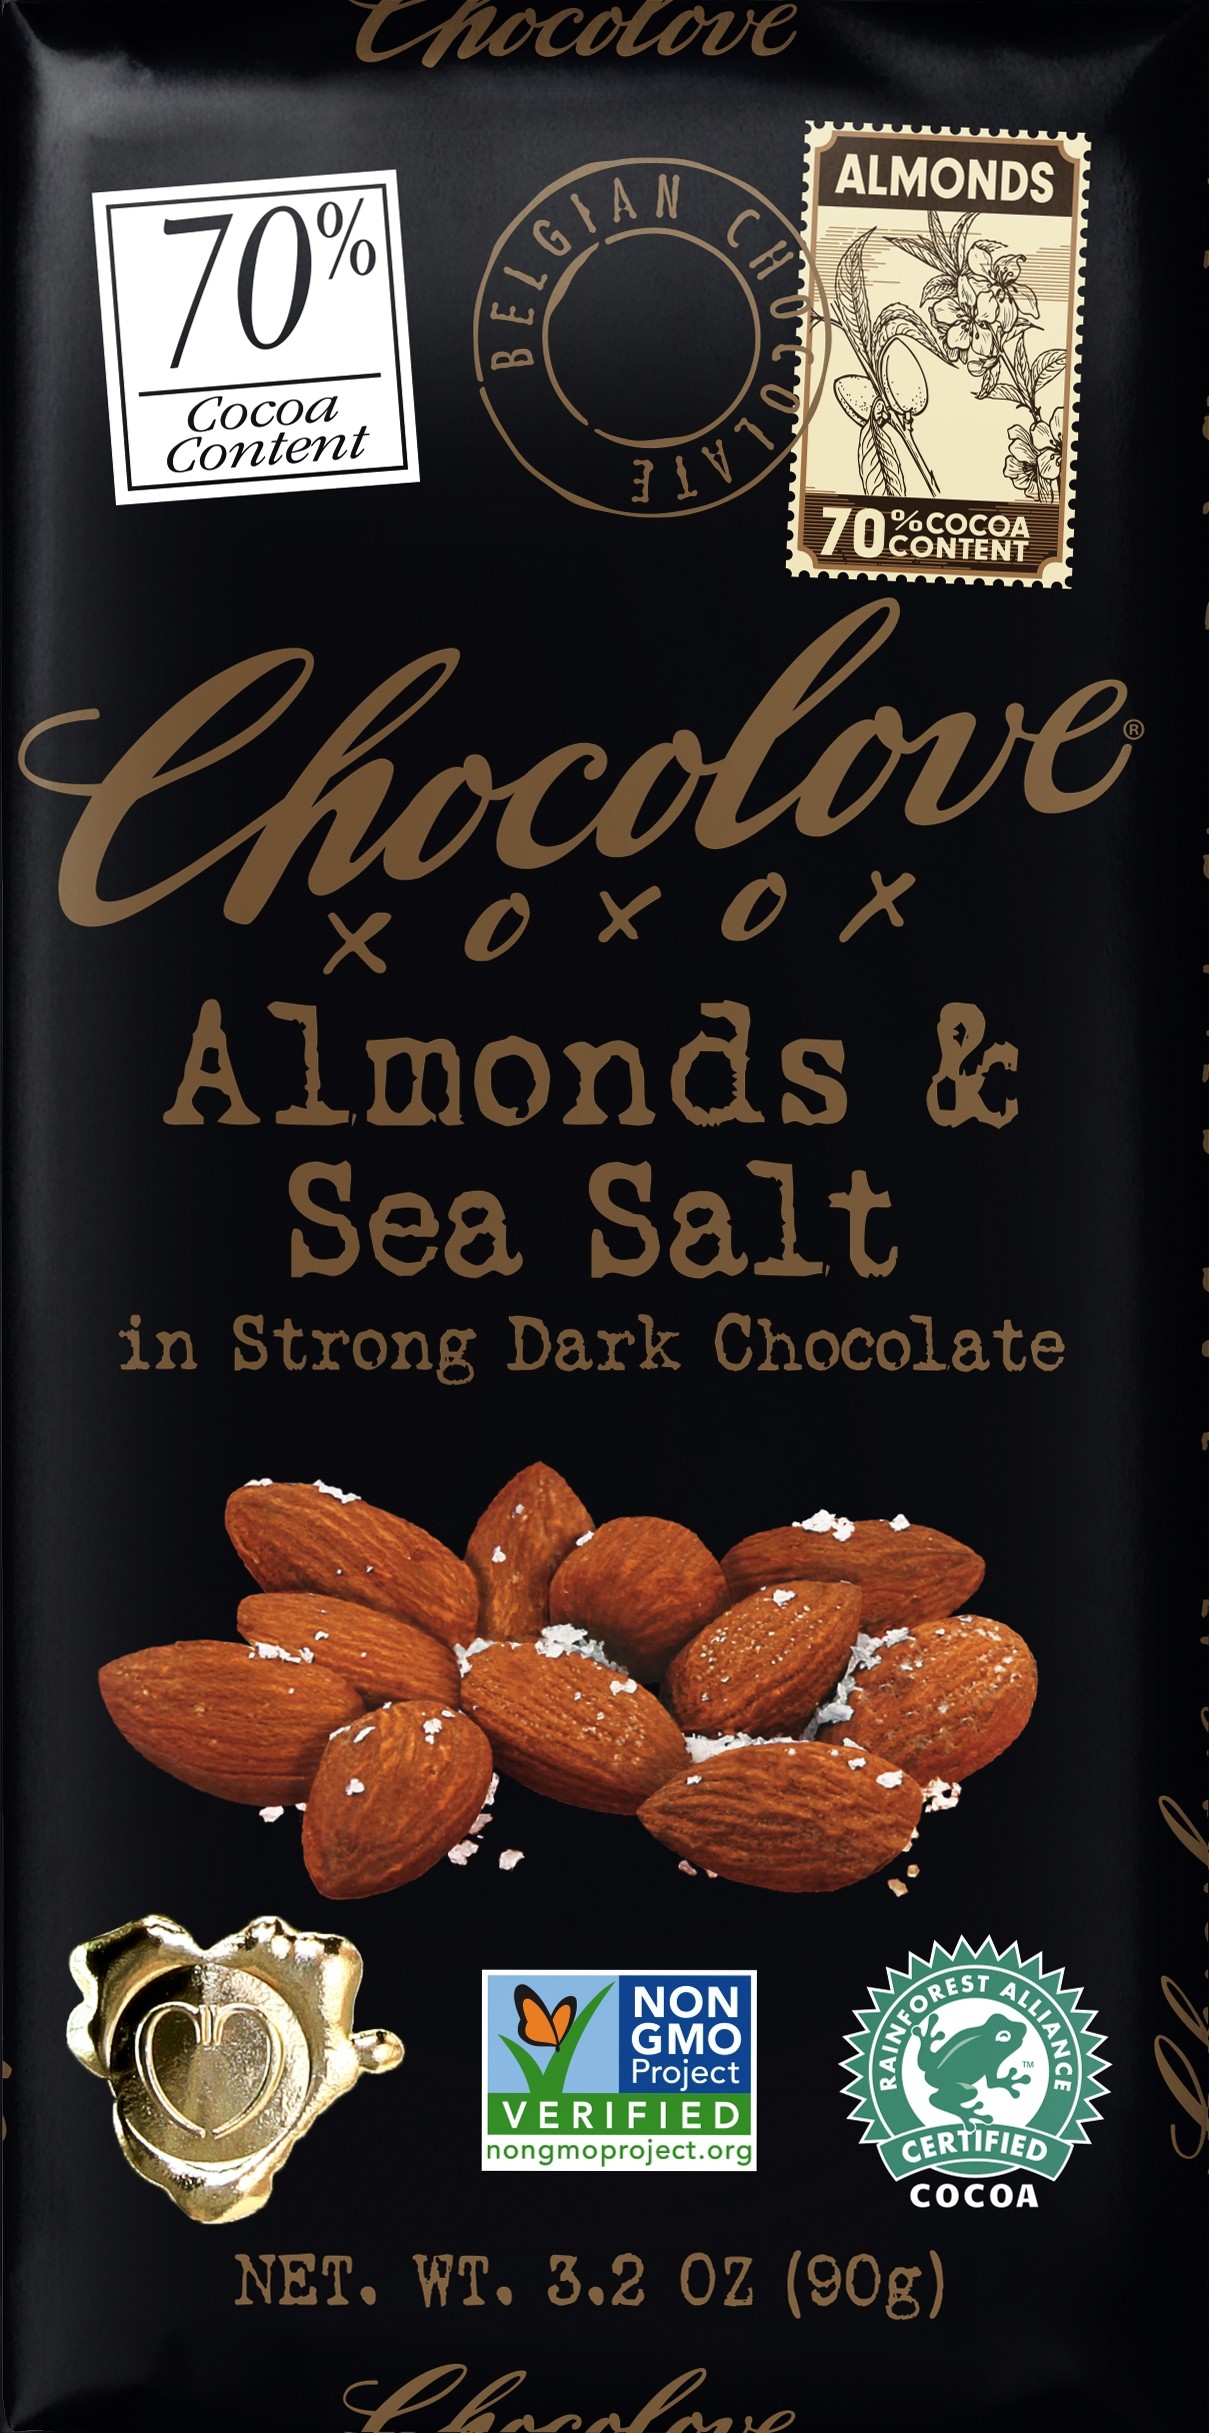 美國70％可可含量海鹽杏仁極黑朱古力"Chocolove xoxox" 70% COCOA CONTENT SEA SALTED & ALMONDS IN STRONG DARK CHOCOLATE